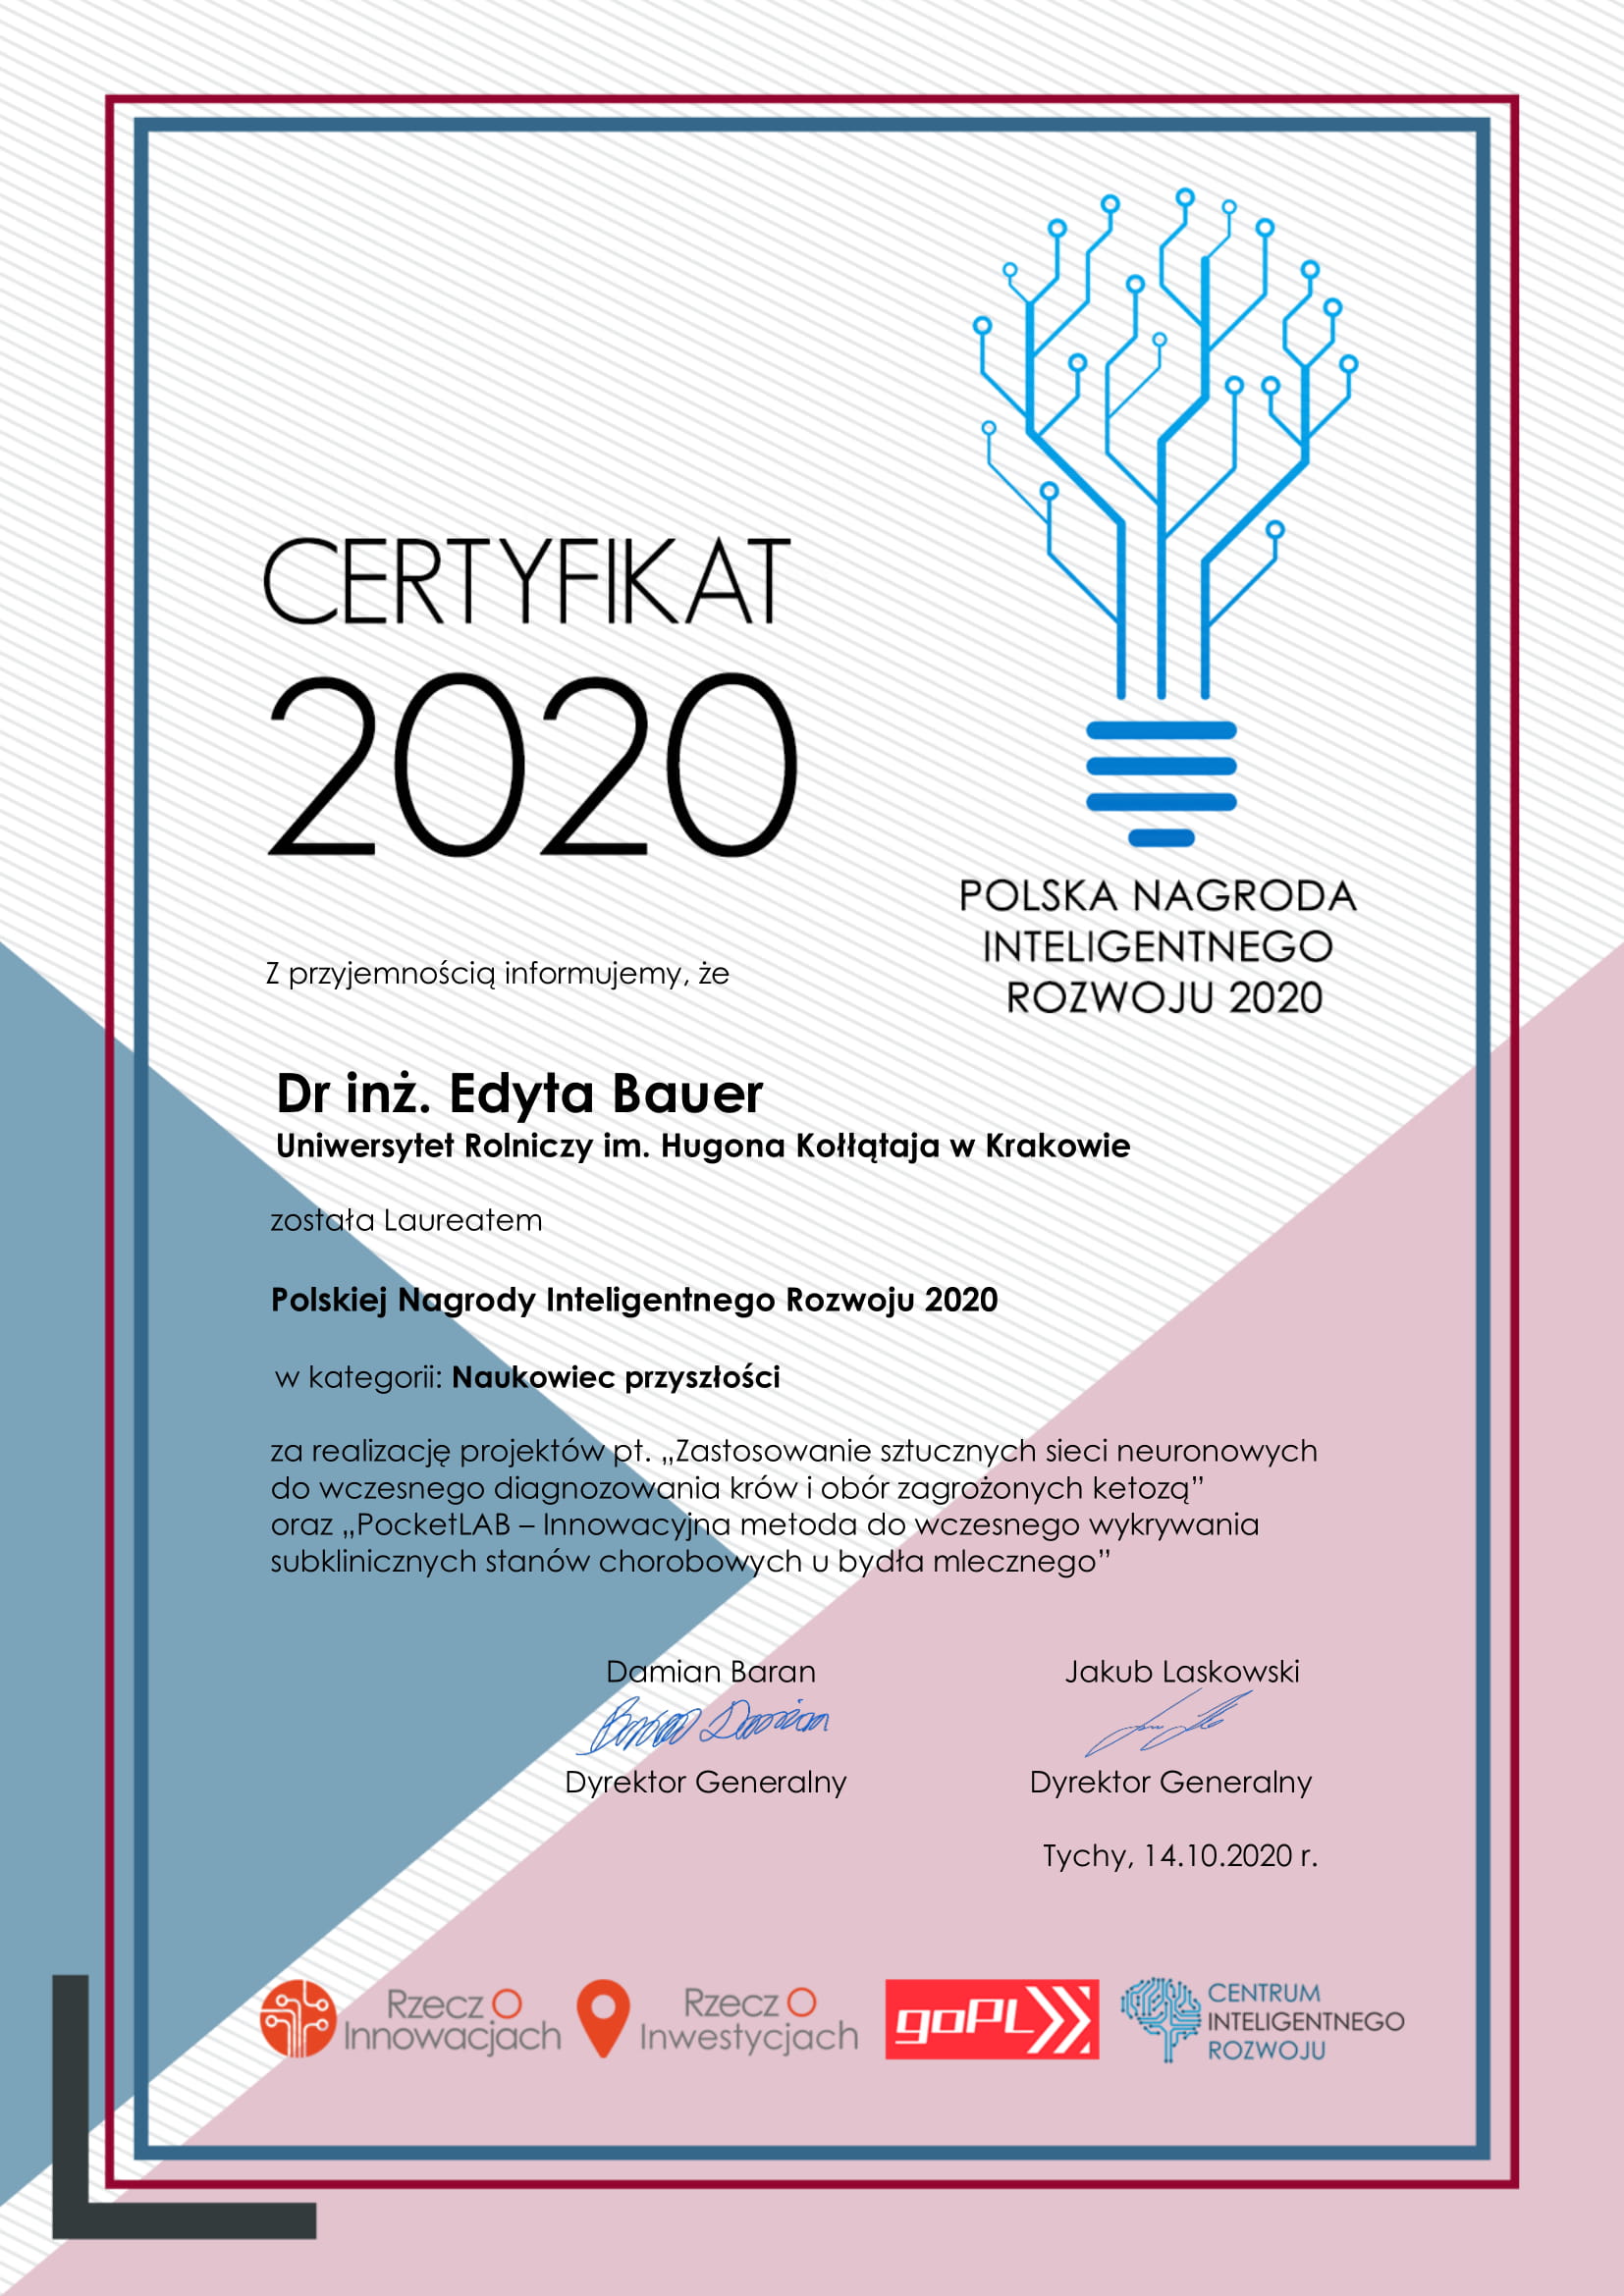 PNIR2020 Certyfikat Dr inz. Edyta Bauer 1 002